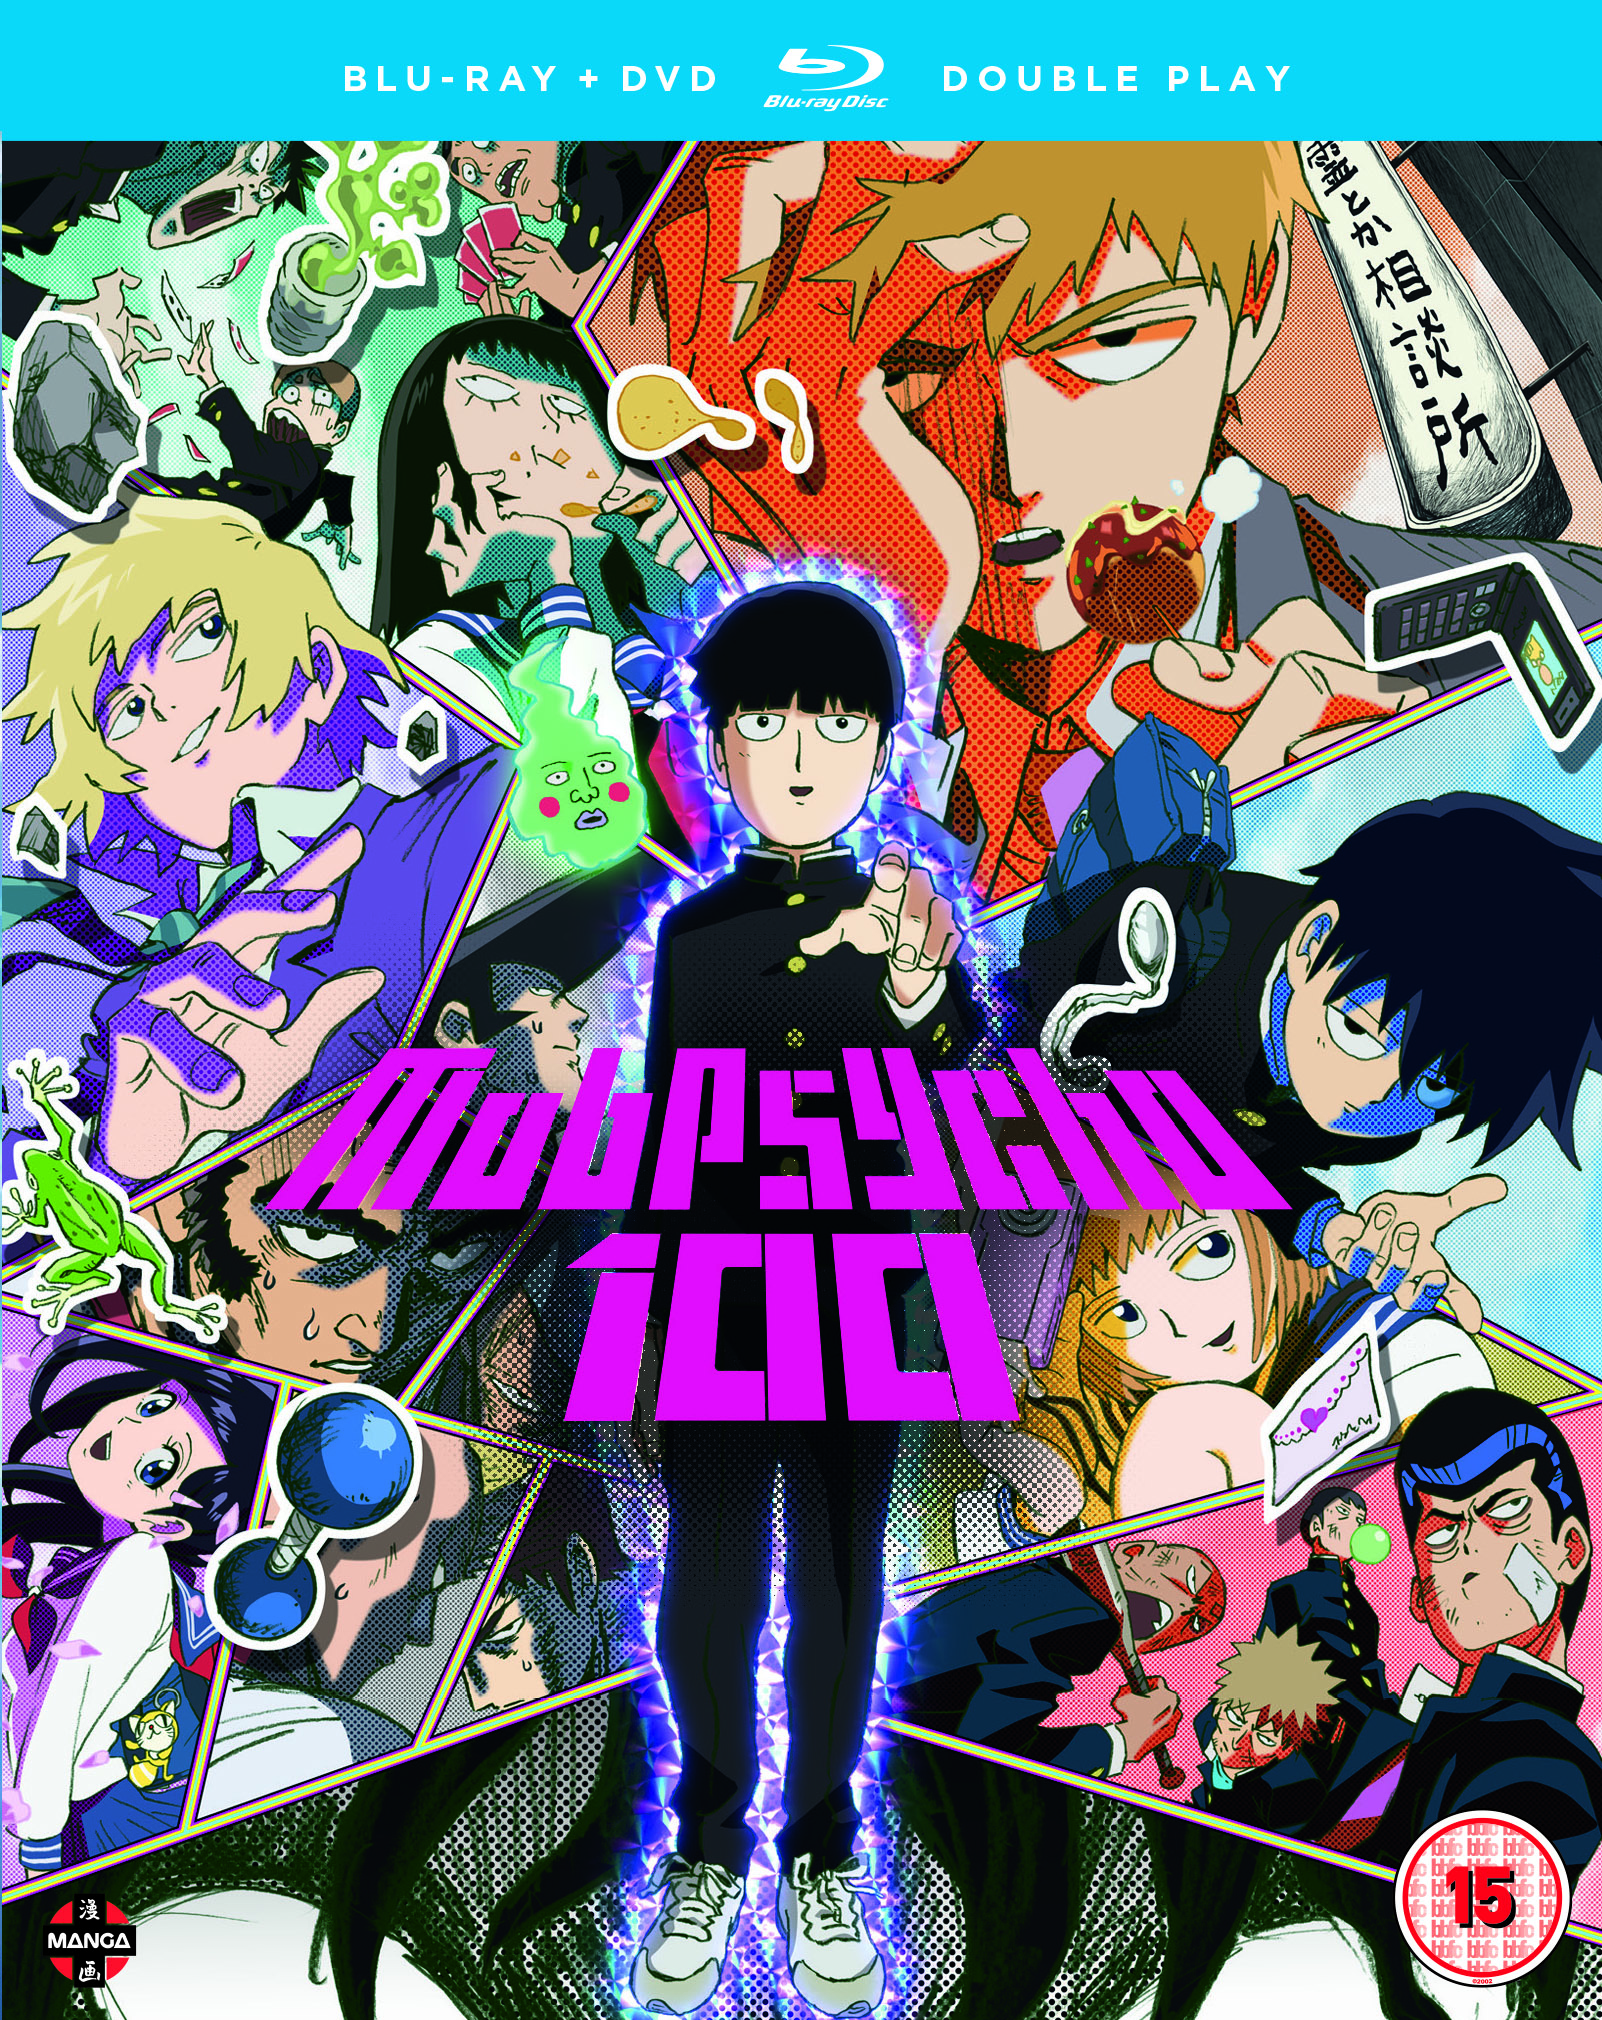 Mob Psycho 100 Anime Season 3's Promo Video Highlights Reigen - News - Anime  News Network